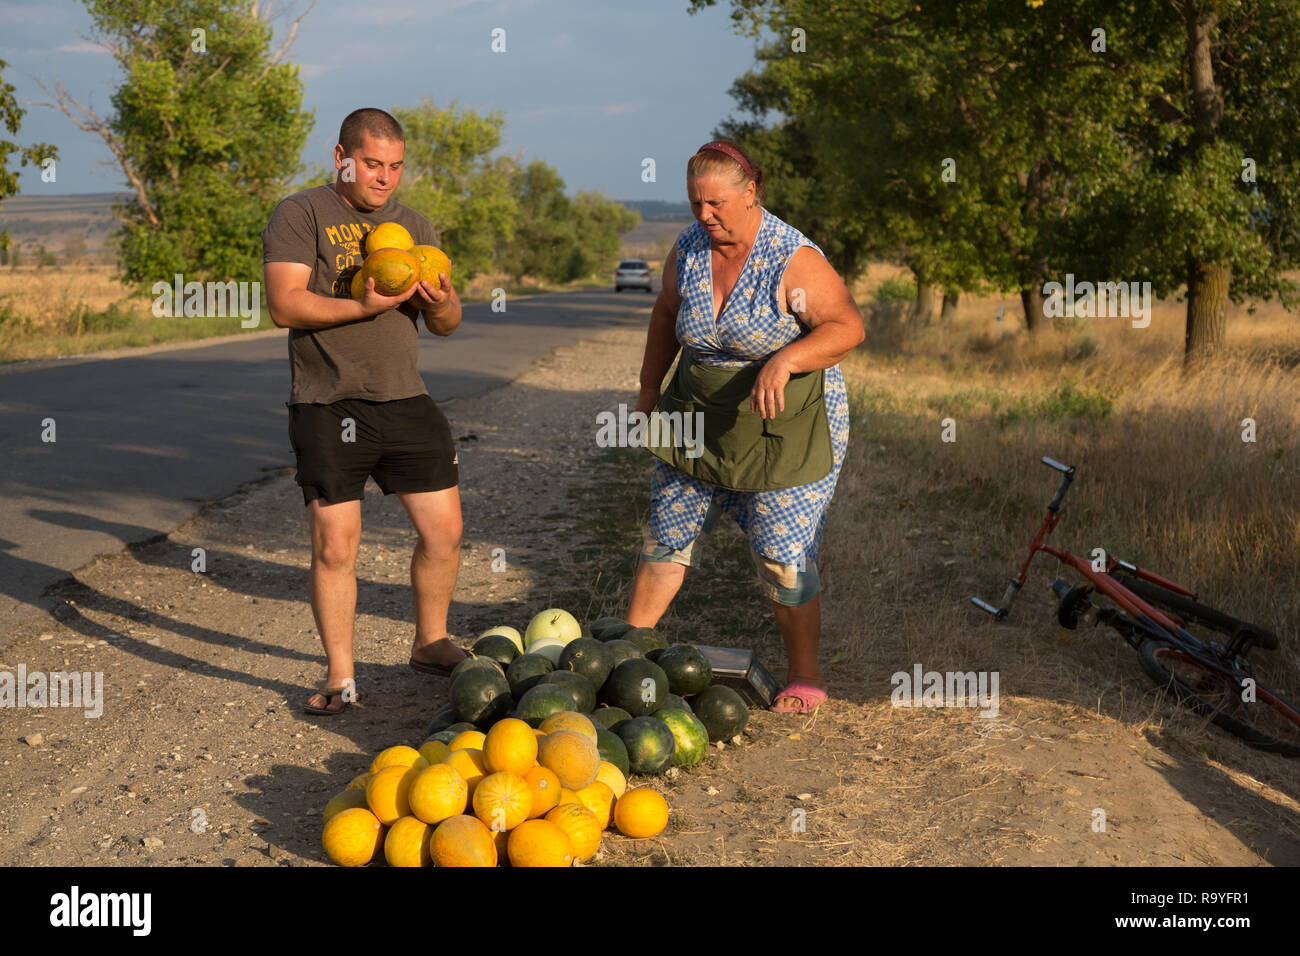 30.08.2016, Causeni, Rajon Causeni, Republik Moldau - Baeuerin verkauft Melonen an der Landstrasse. 00A160830D457CARO.JPG [MODEL RELEASE: NO, PROPERTY Stock Photo